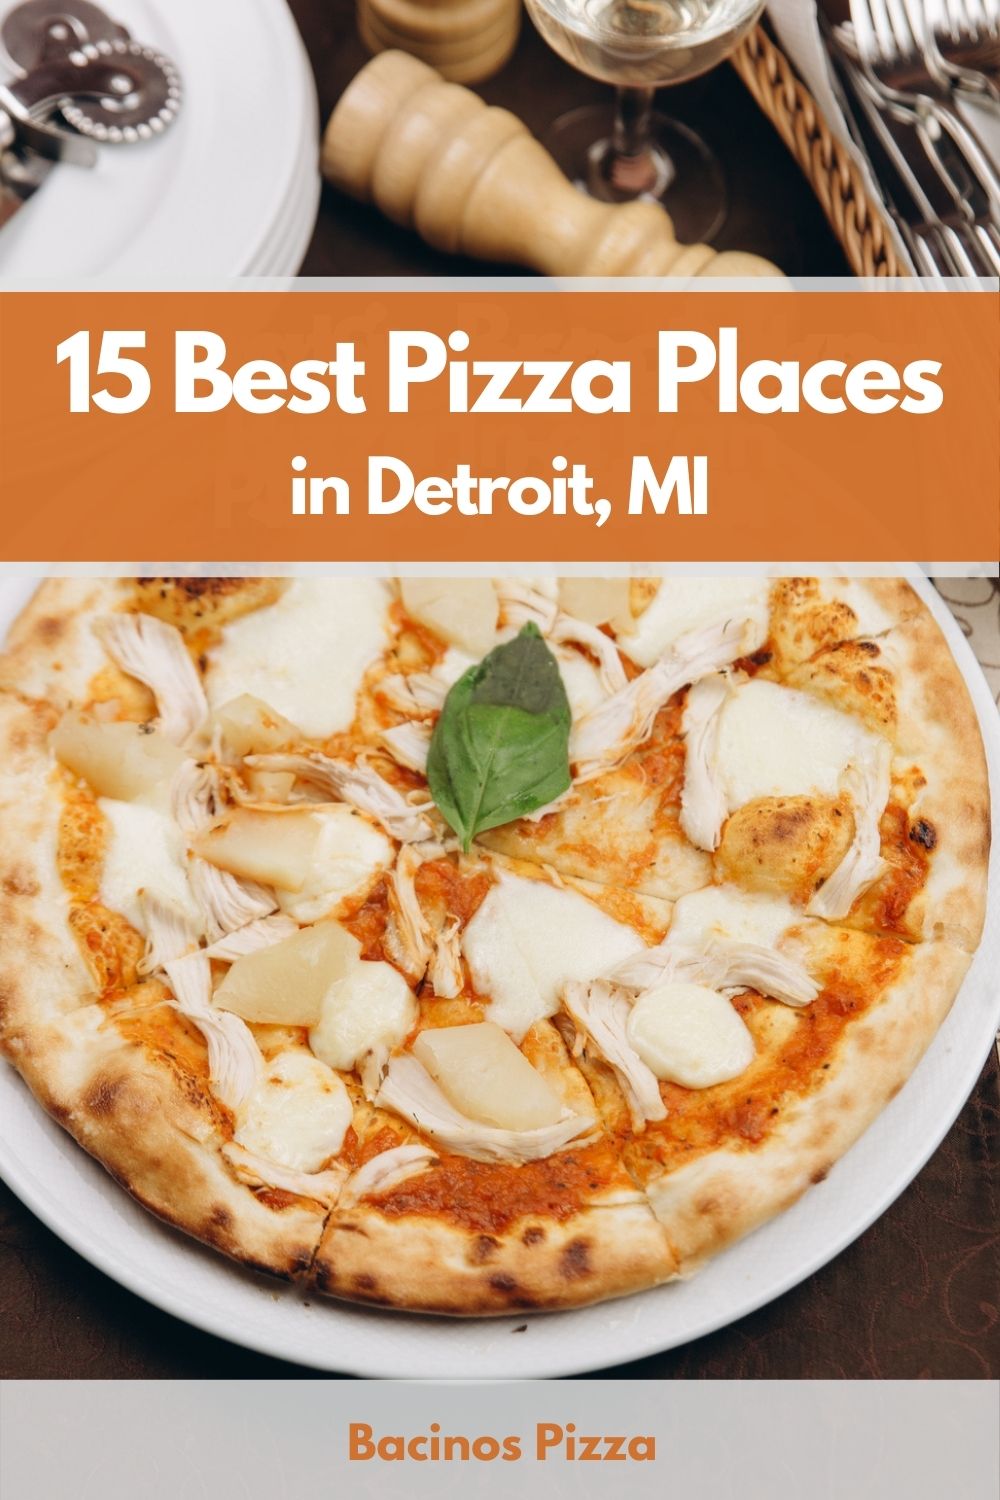 15 Best Pizza Places in Detroit, MI pin